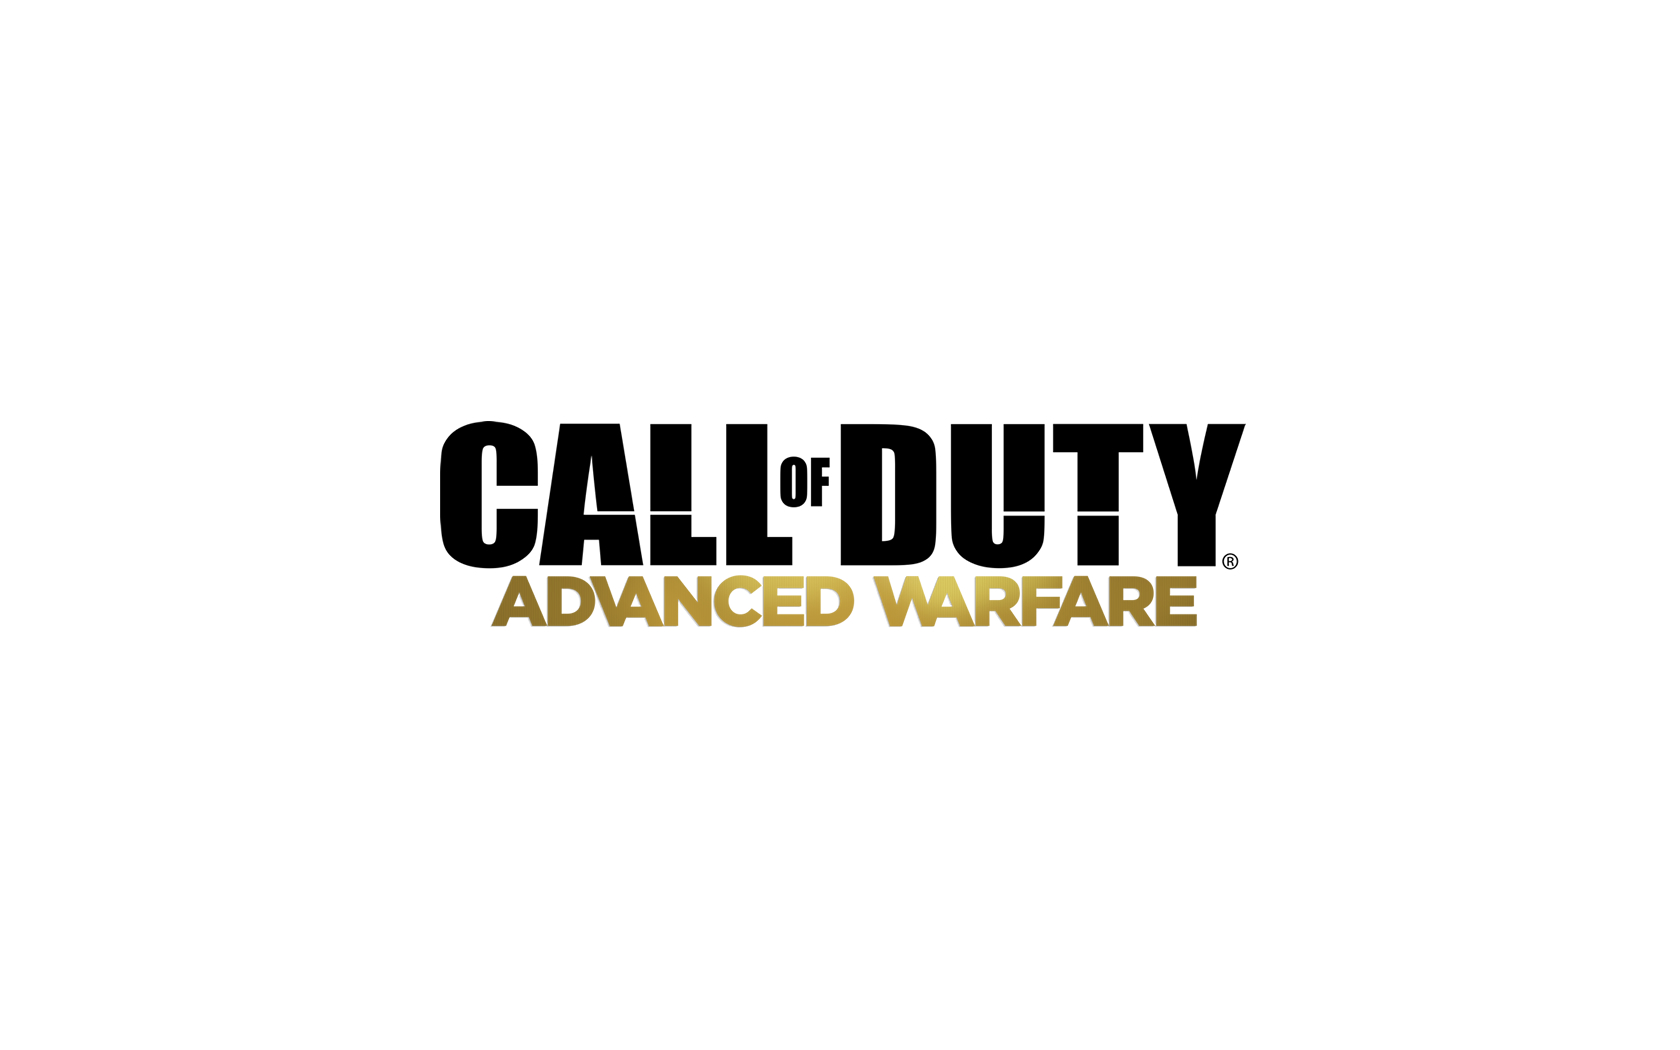 call of duty advanced warfare logo wallpaper 40671 41622 hd wallpapers